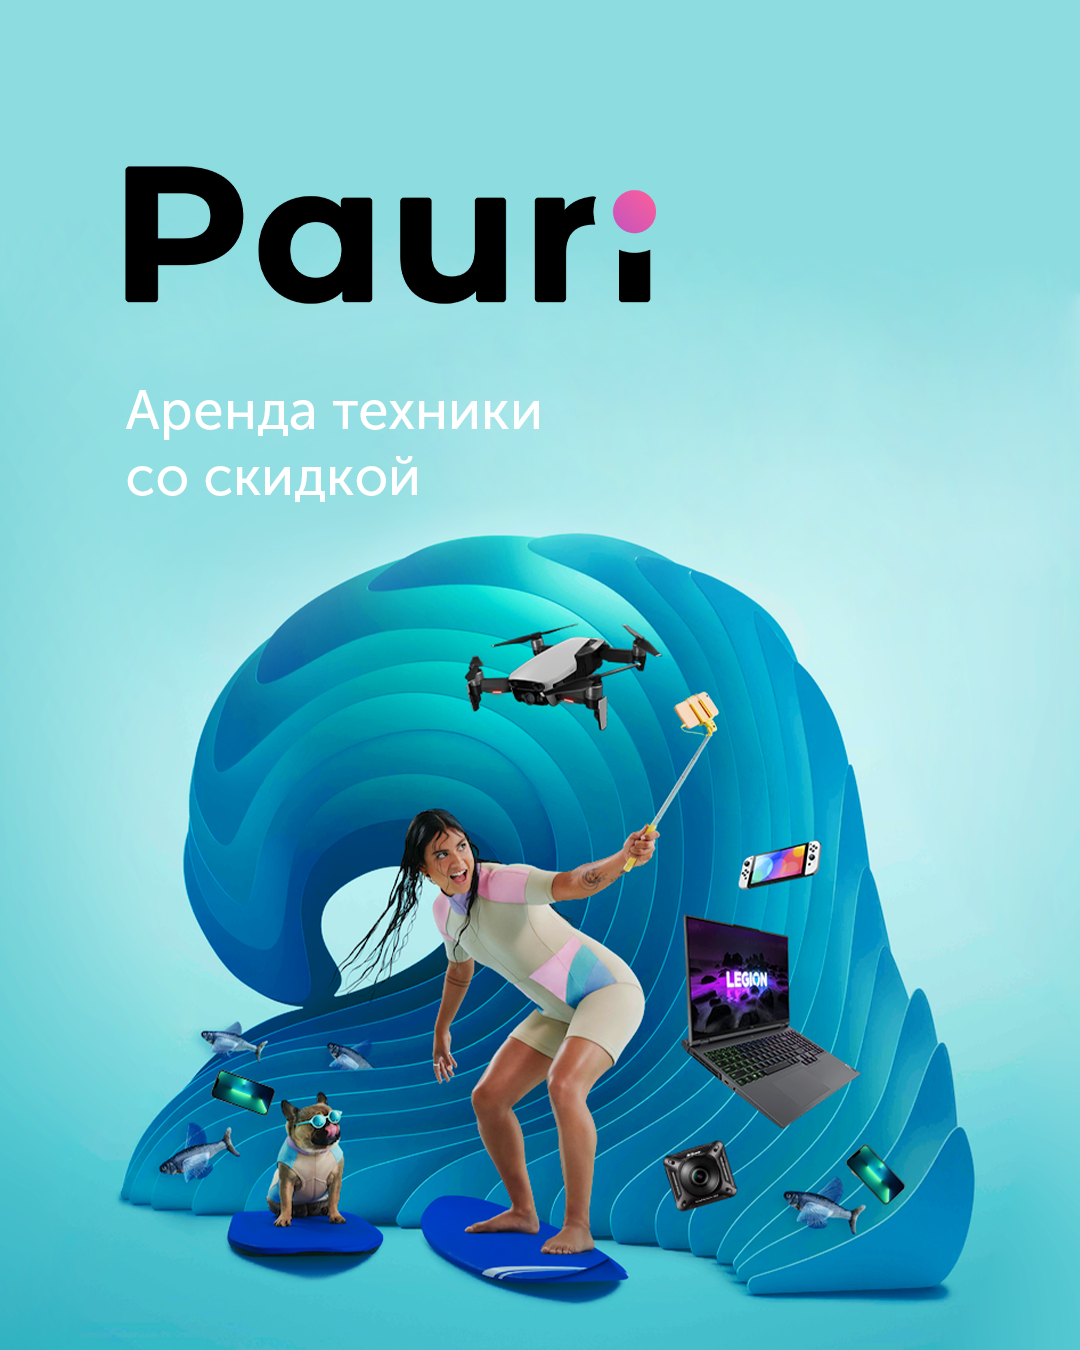 Pauri – сервис аренды техники №1